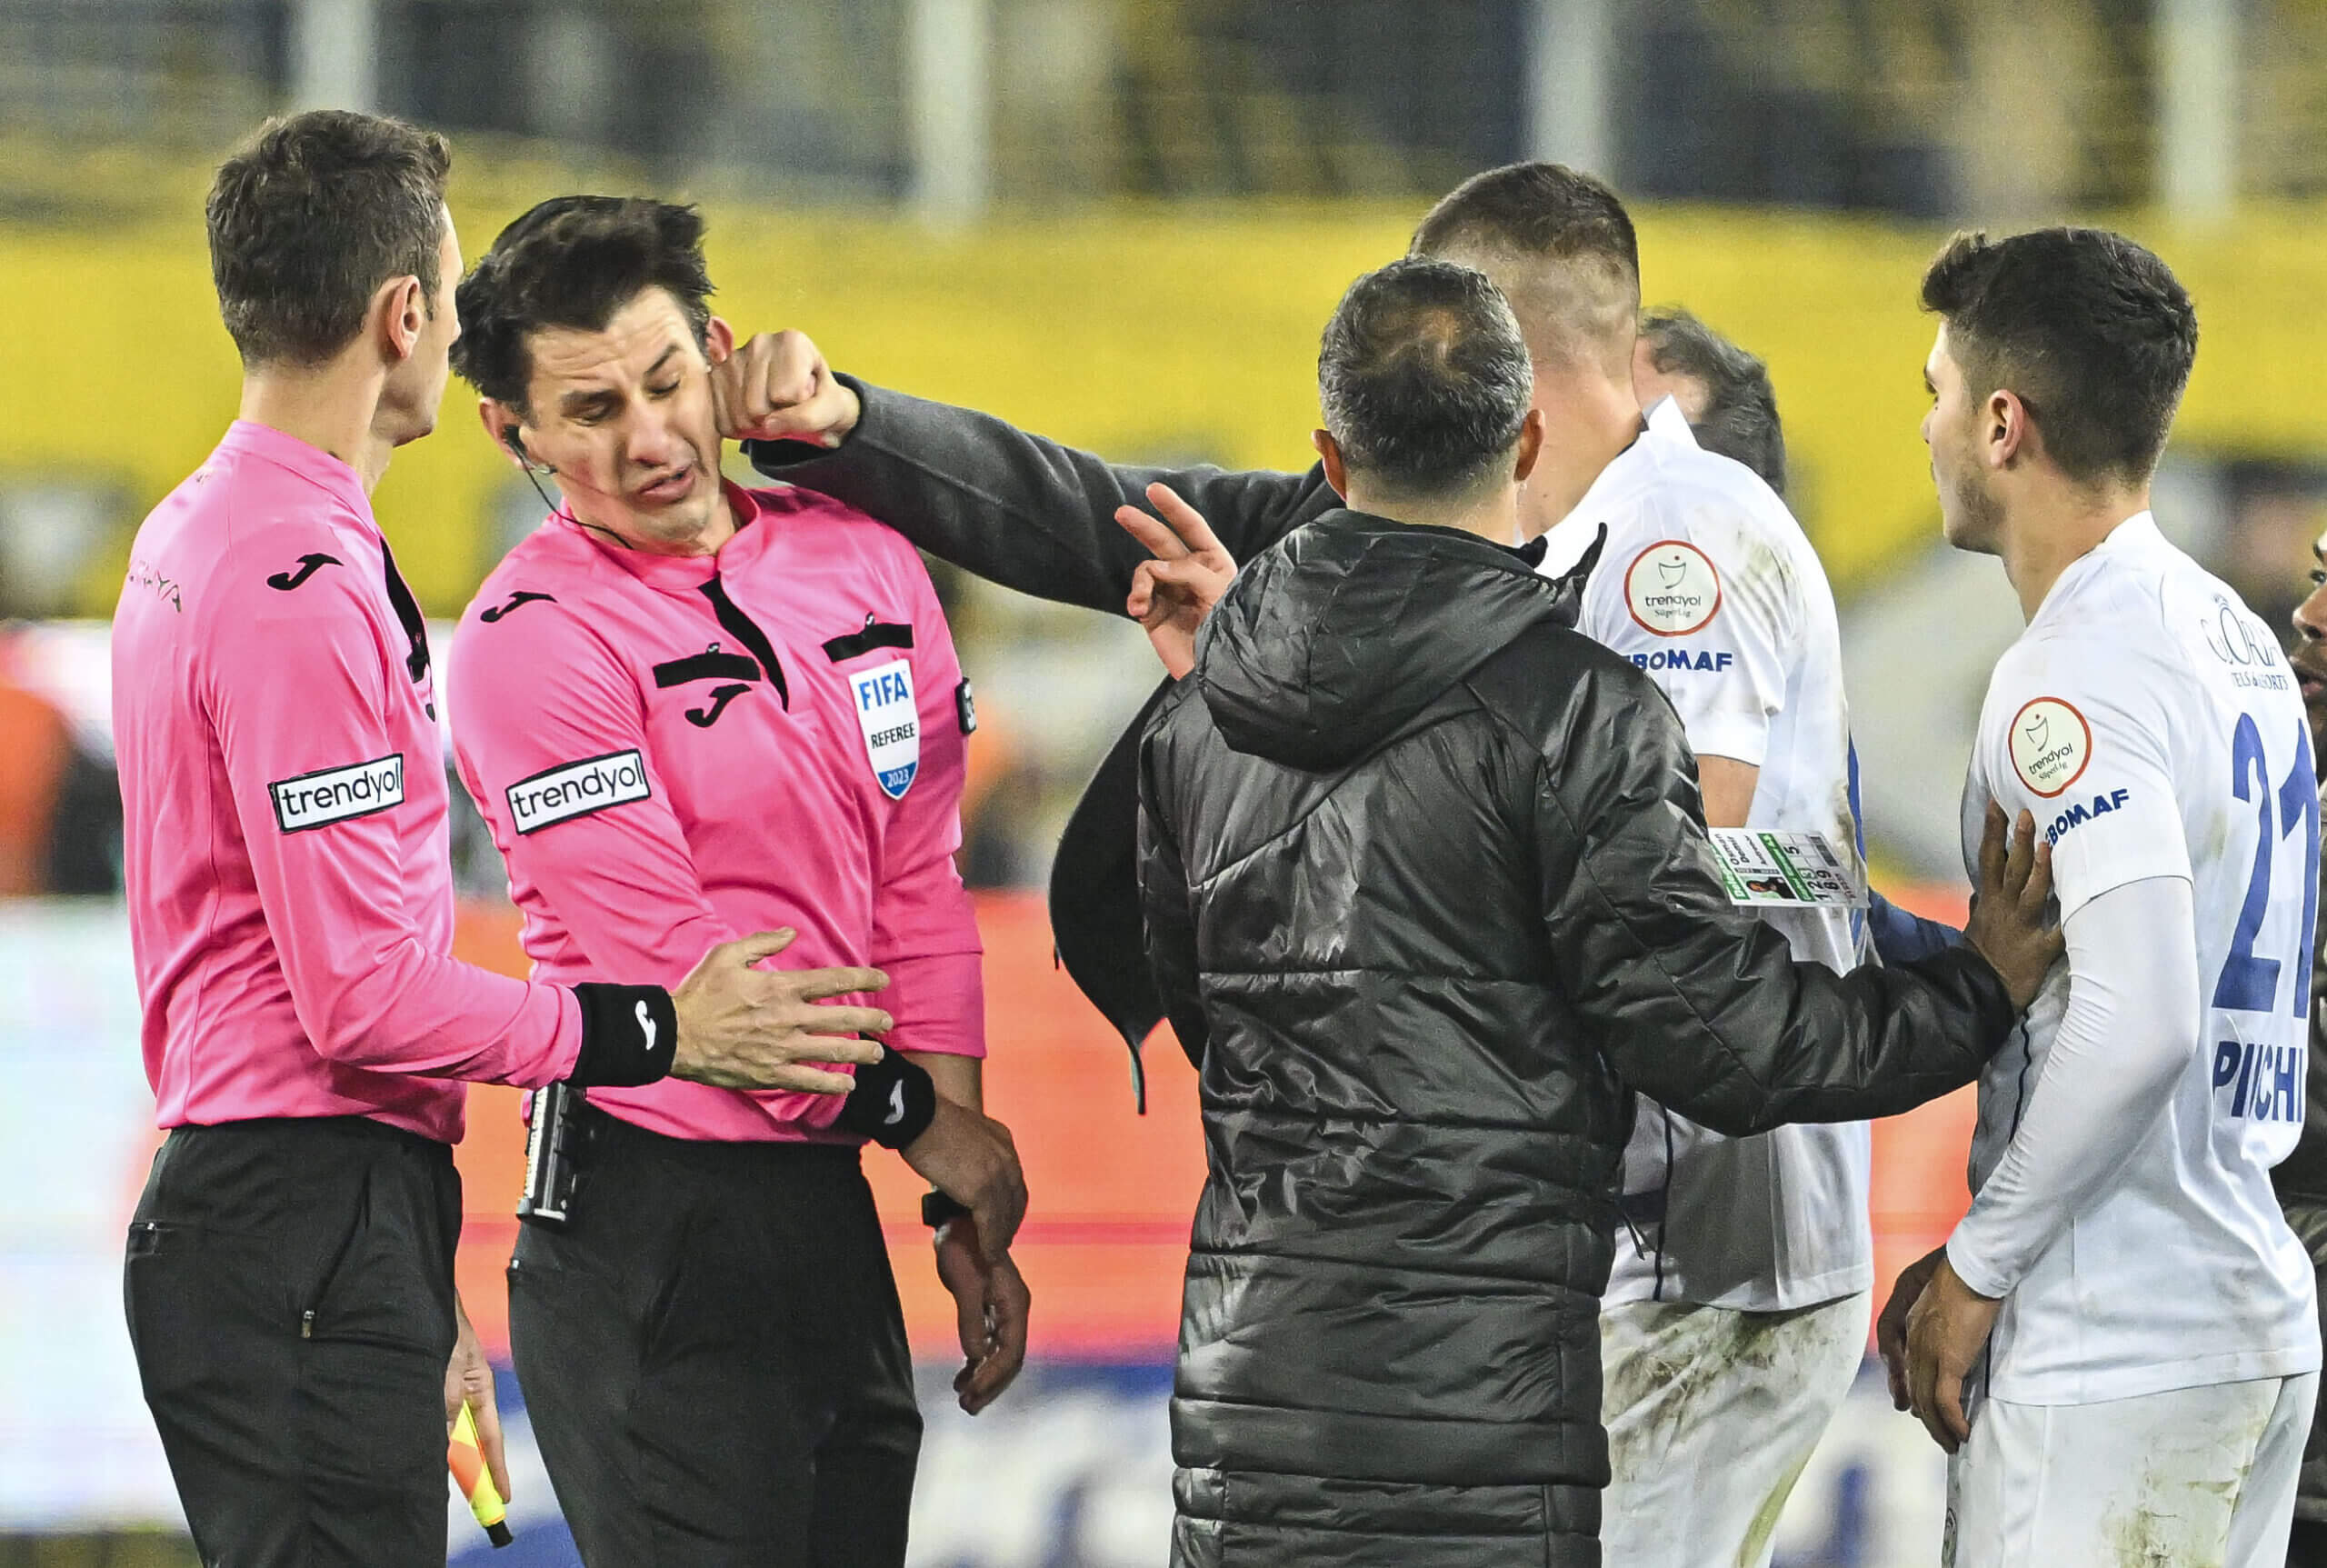 Ankaragucu president Faruk Koca given permanent ban for punching referee, says Turkish FA